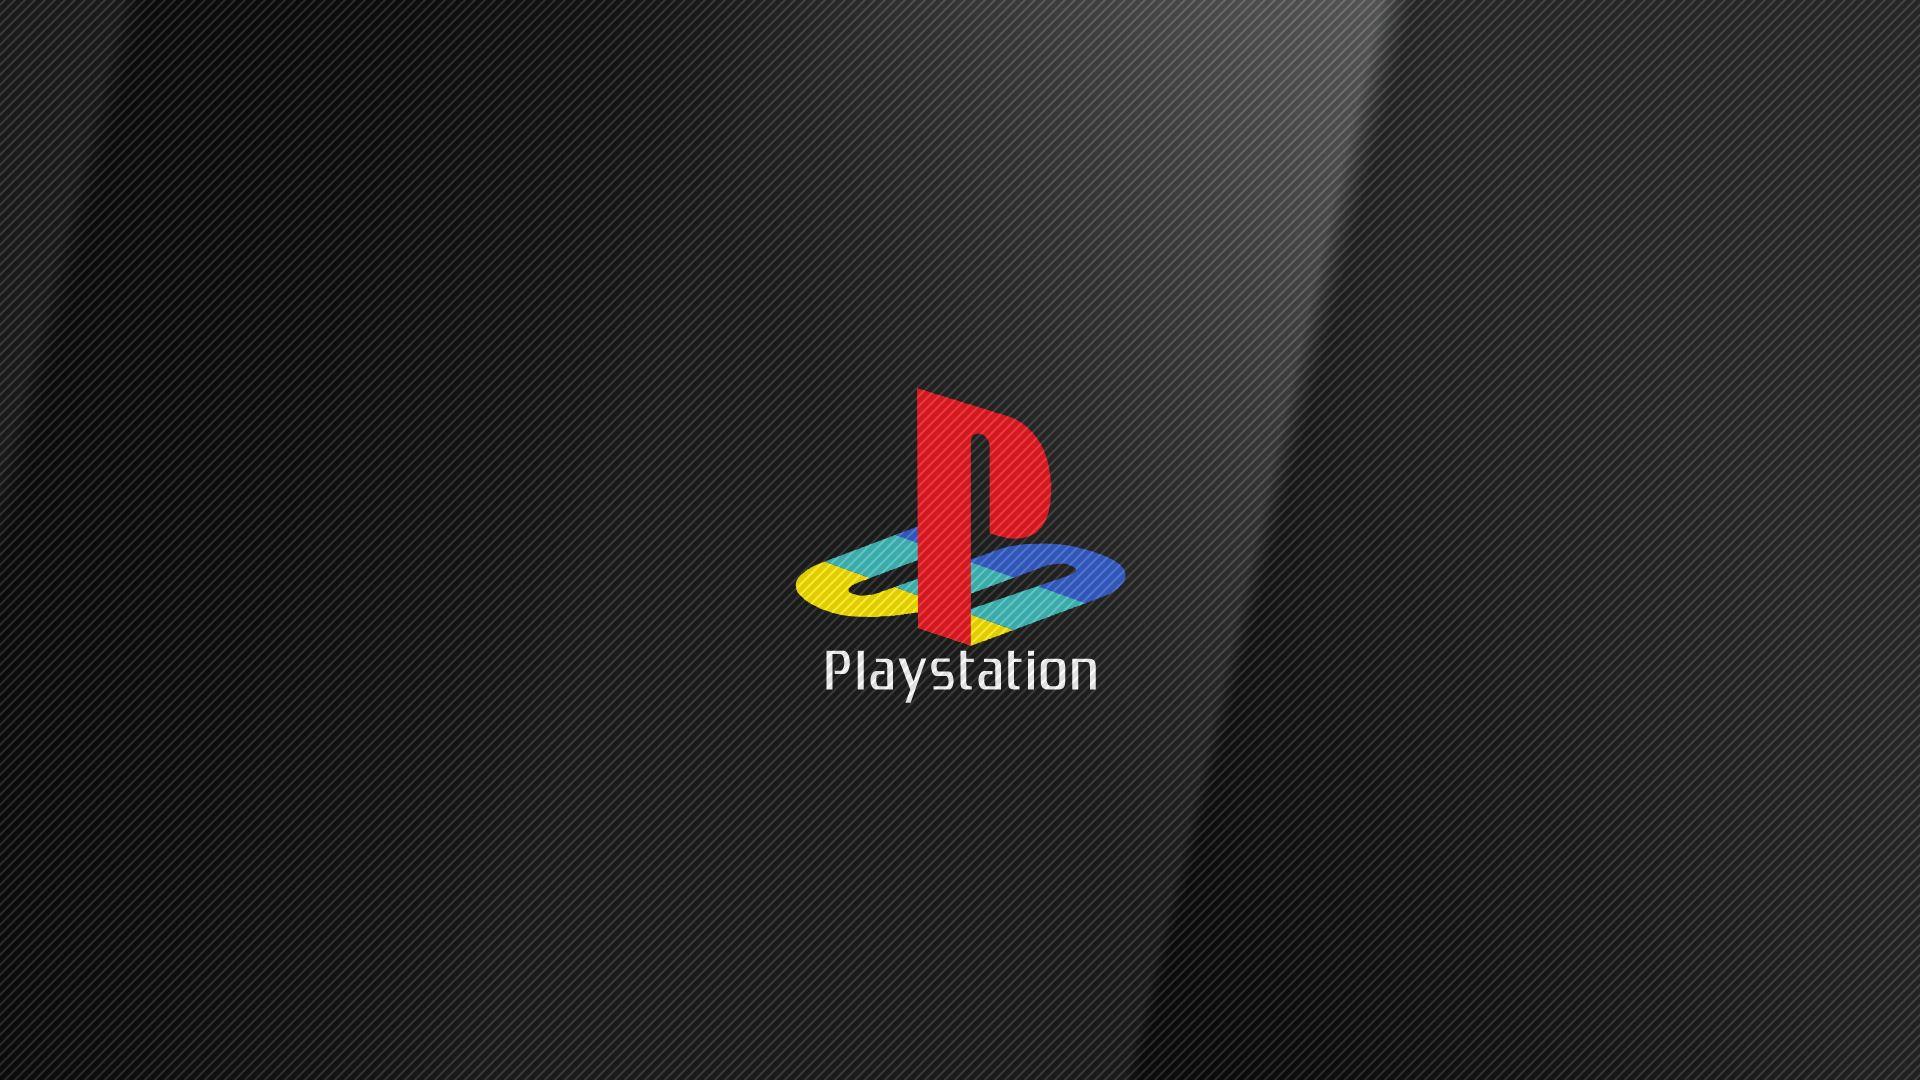 Sony Playstation Logo Wallpaper 41197 1920x1080 px